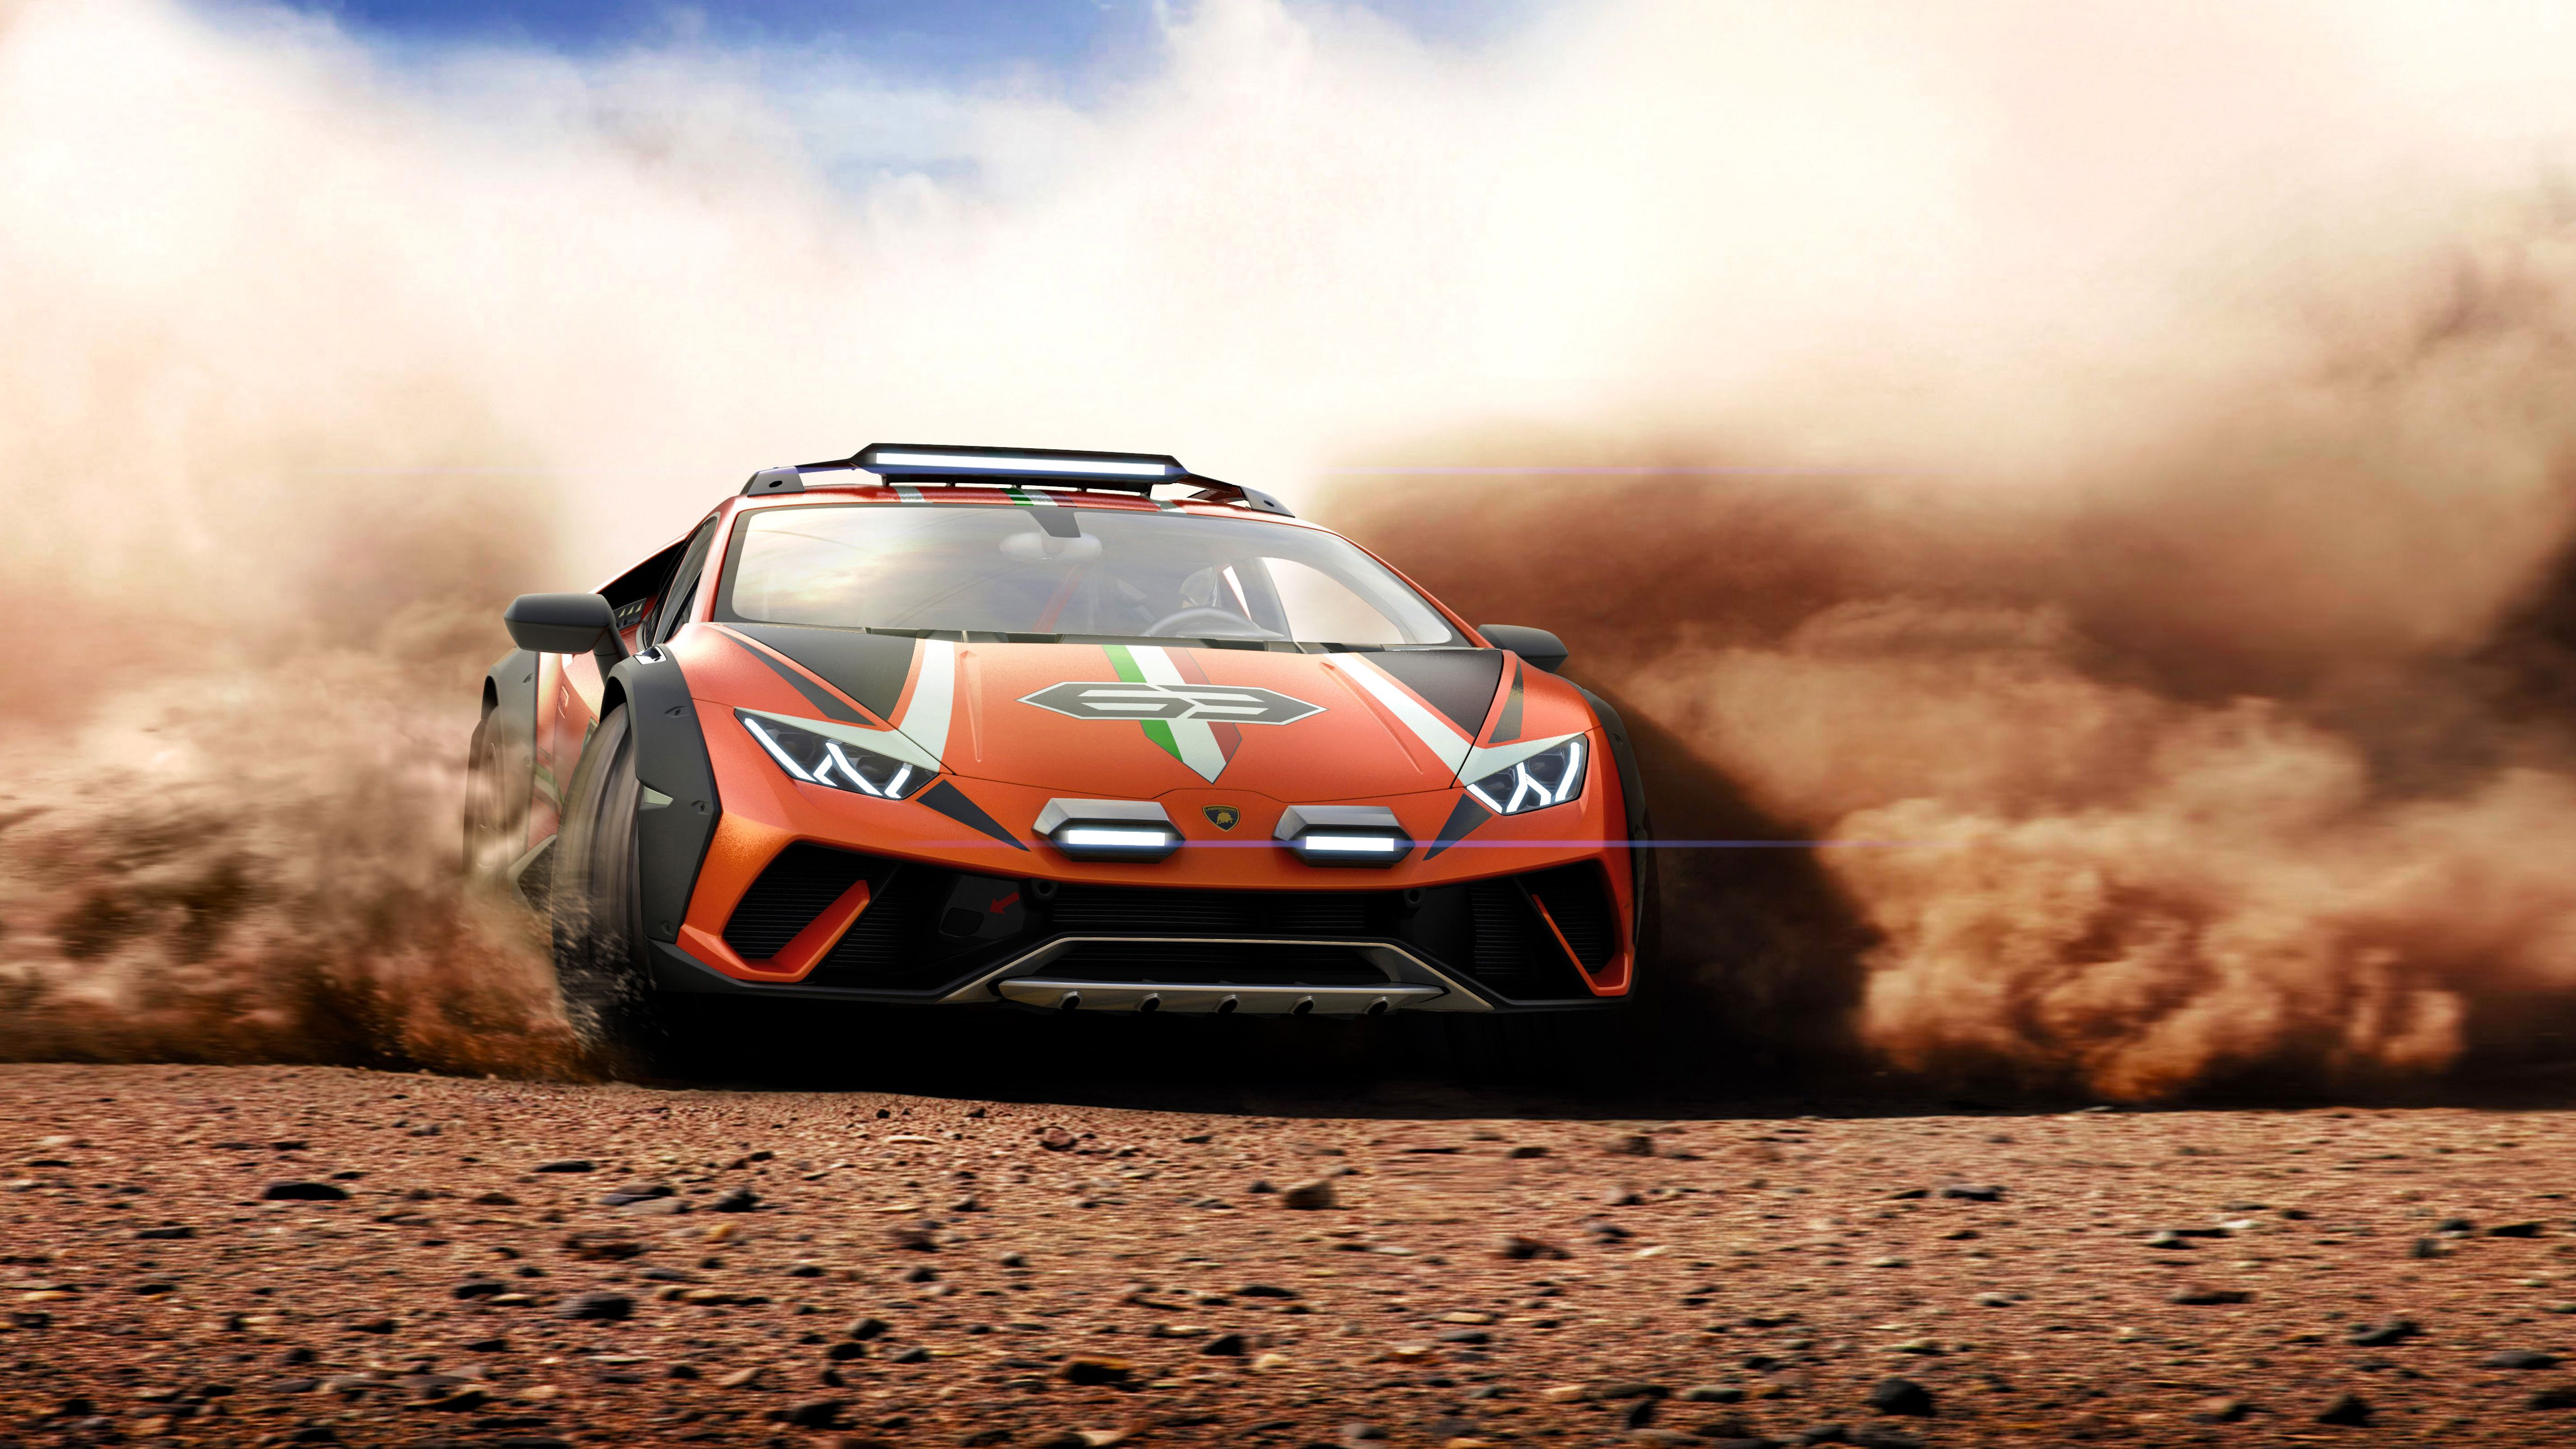 Lamborghini Huracán Sterrato – Crazy Off-Road Supercar Concept